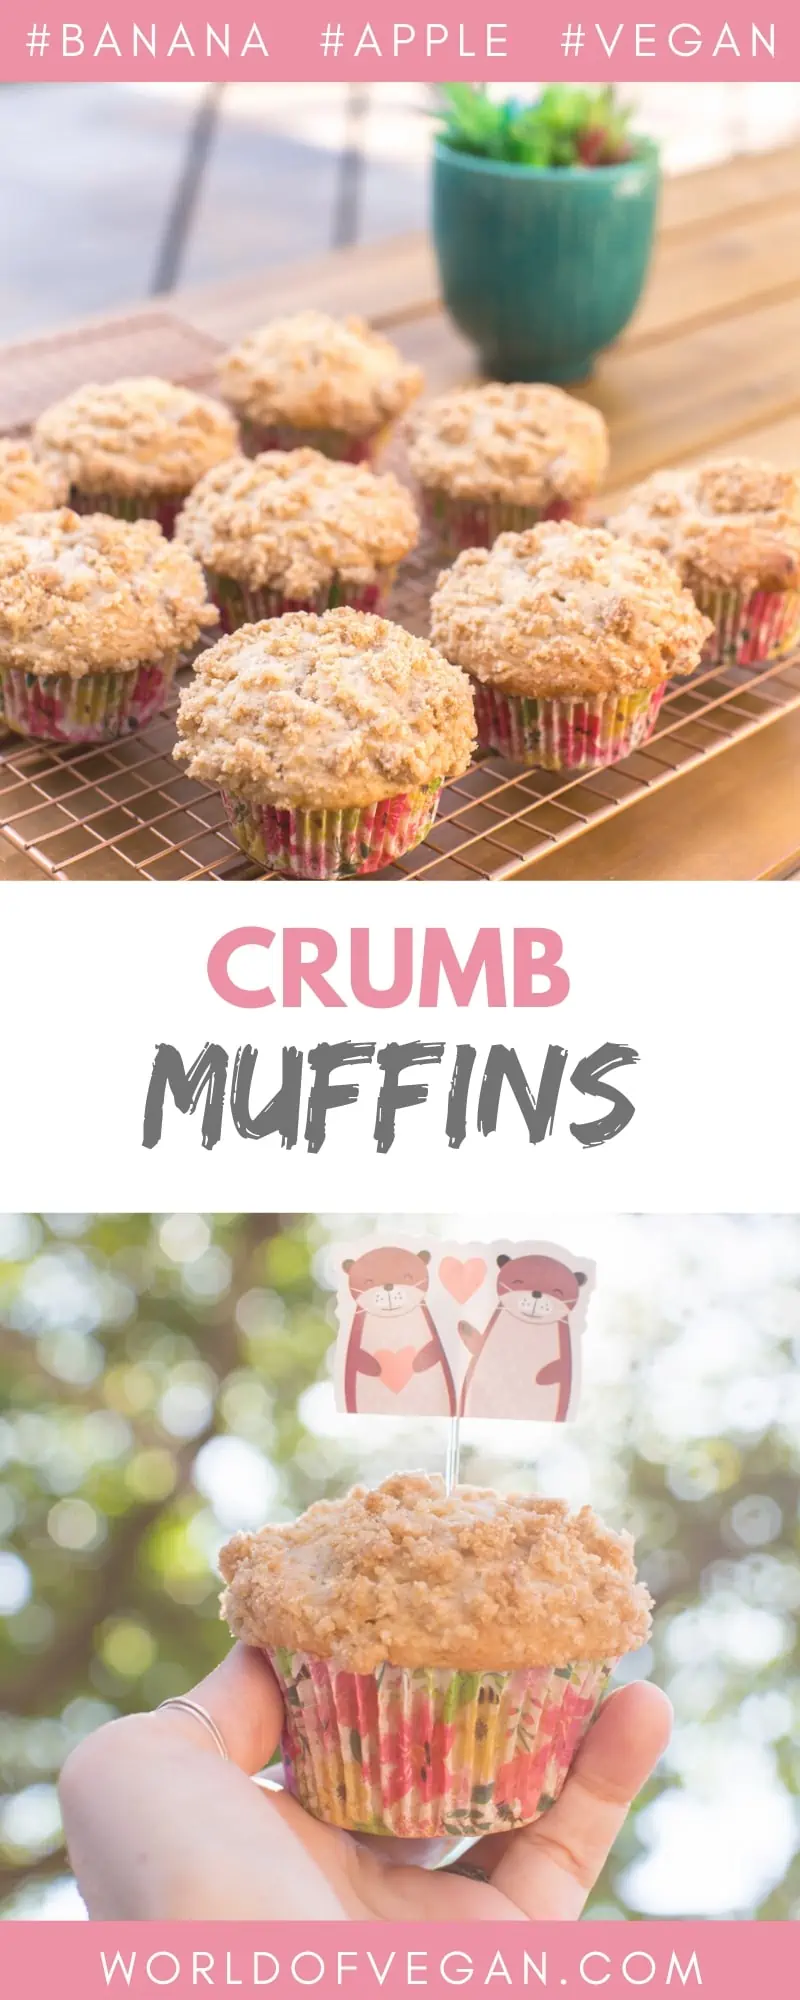 Vegan Crumb Muffins With Apple Cinnamon & Banana | WorldofVegan.com #vegan #muffins #dessert #breakfast